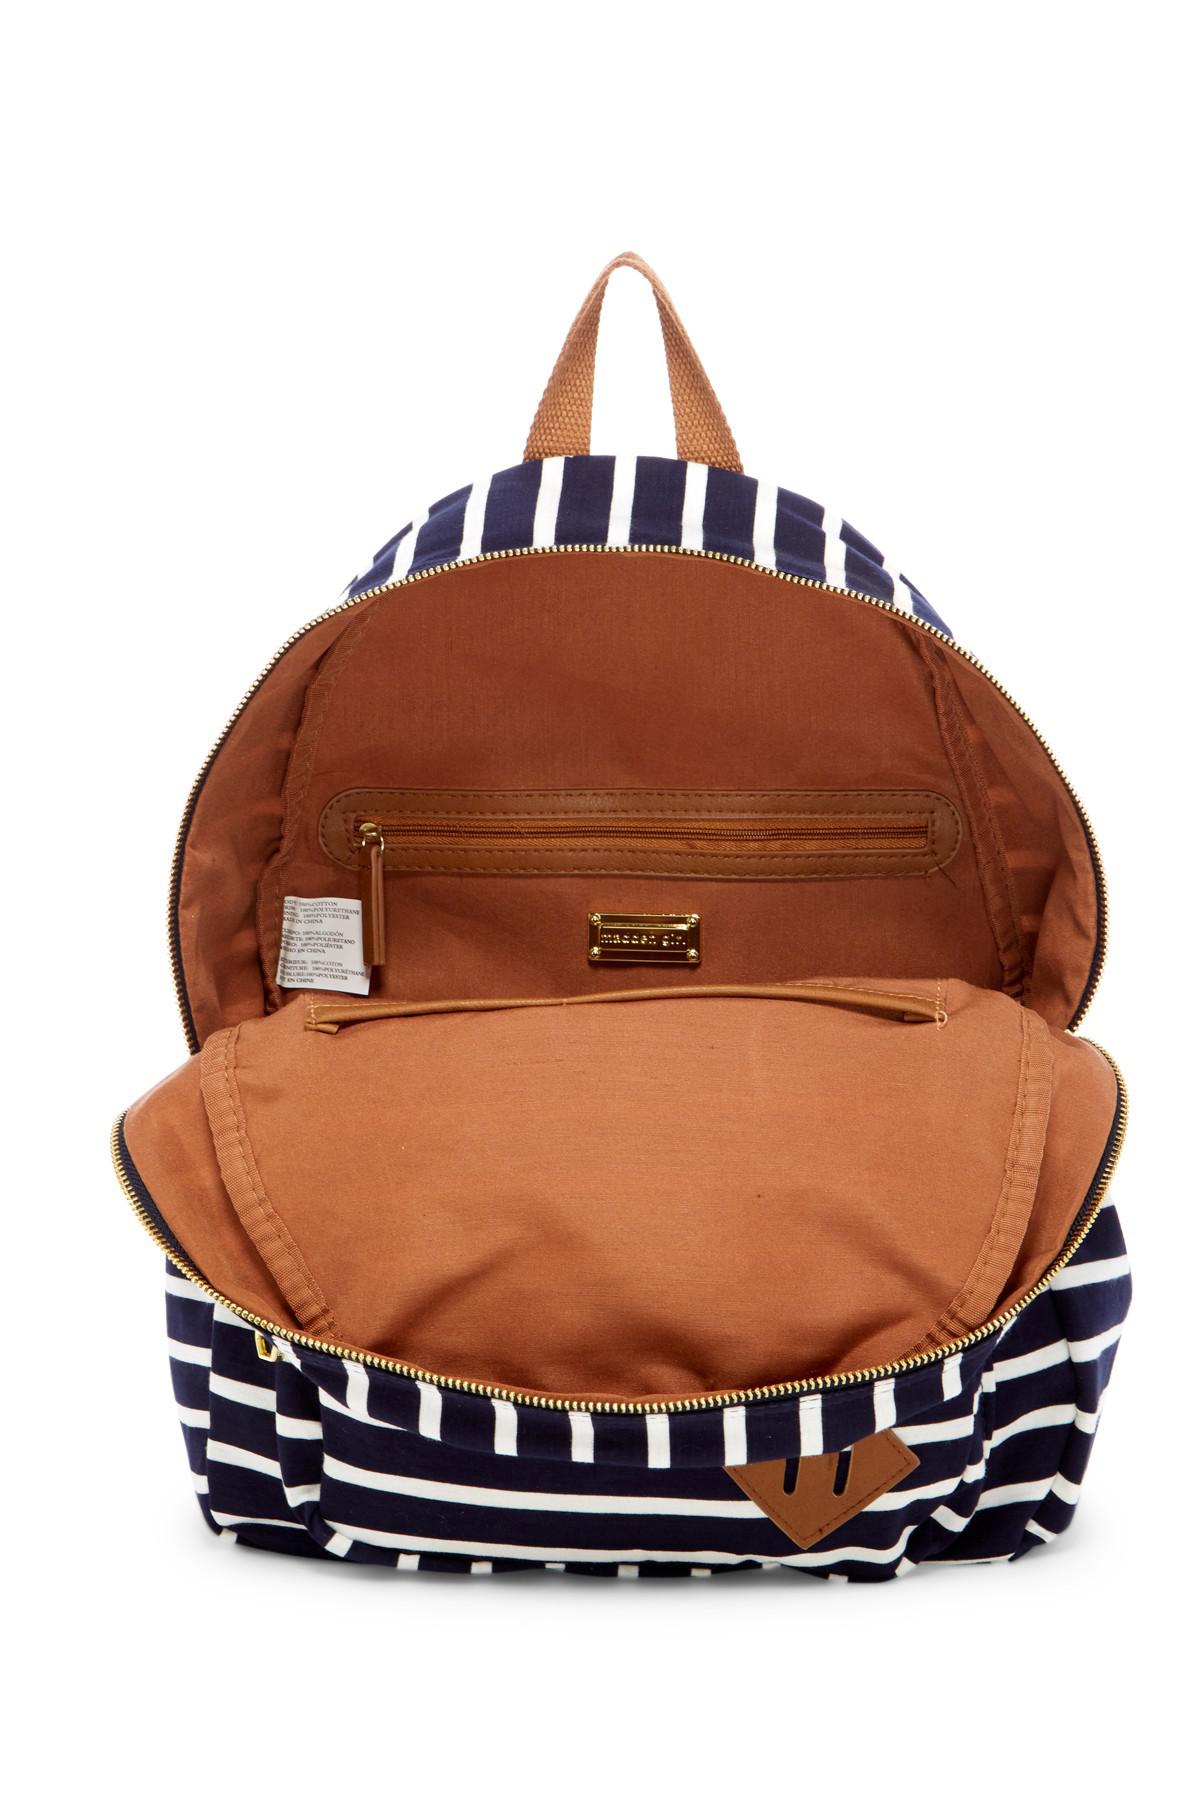 Madden Girl Jersey Striped Weekender Bag